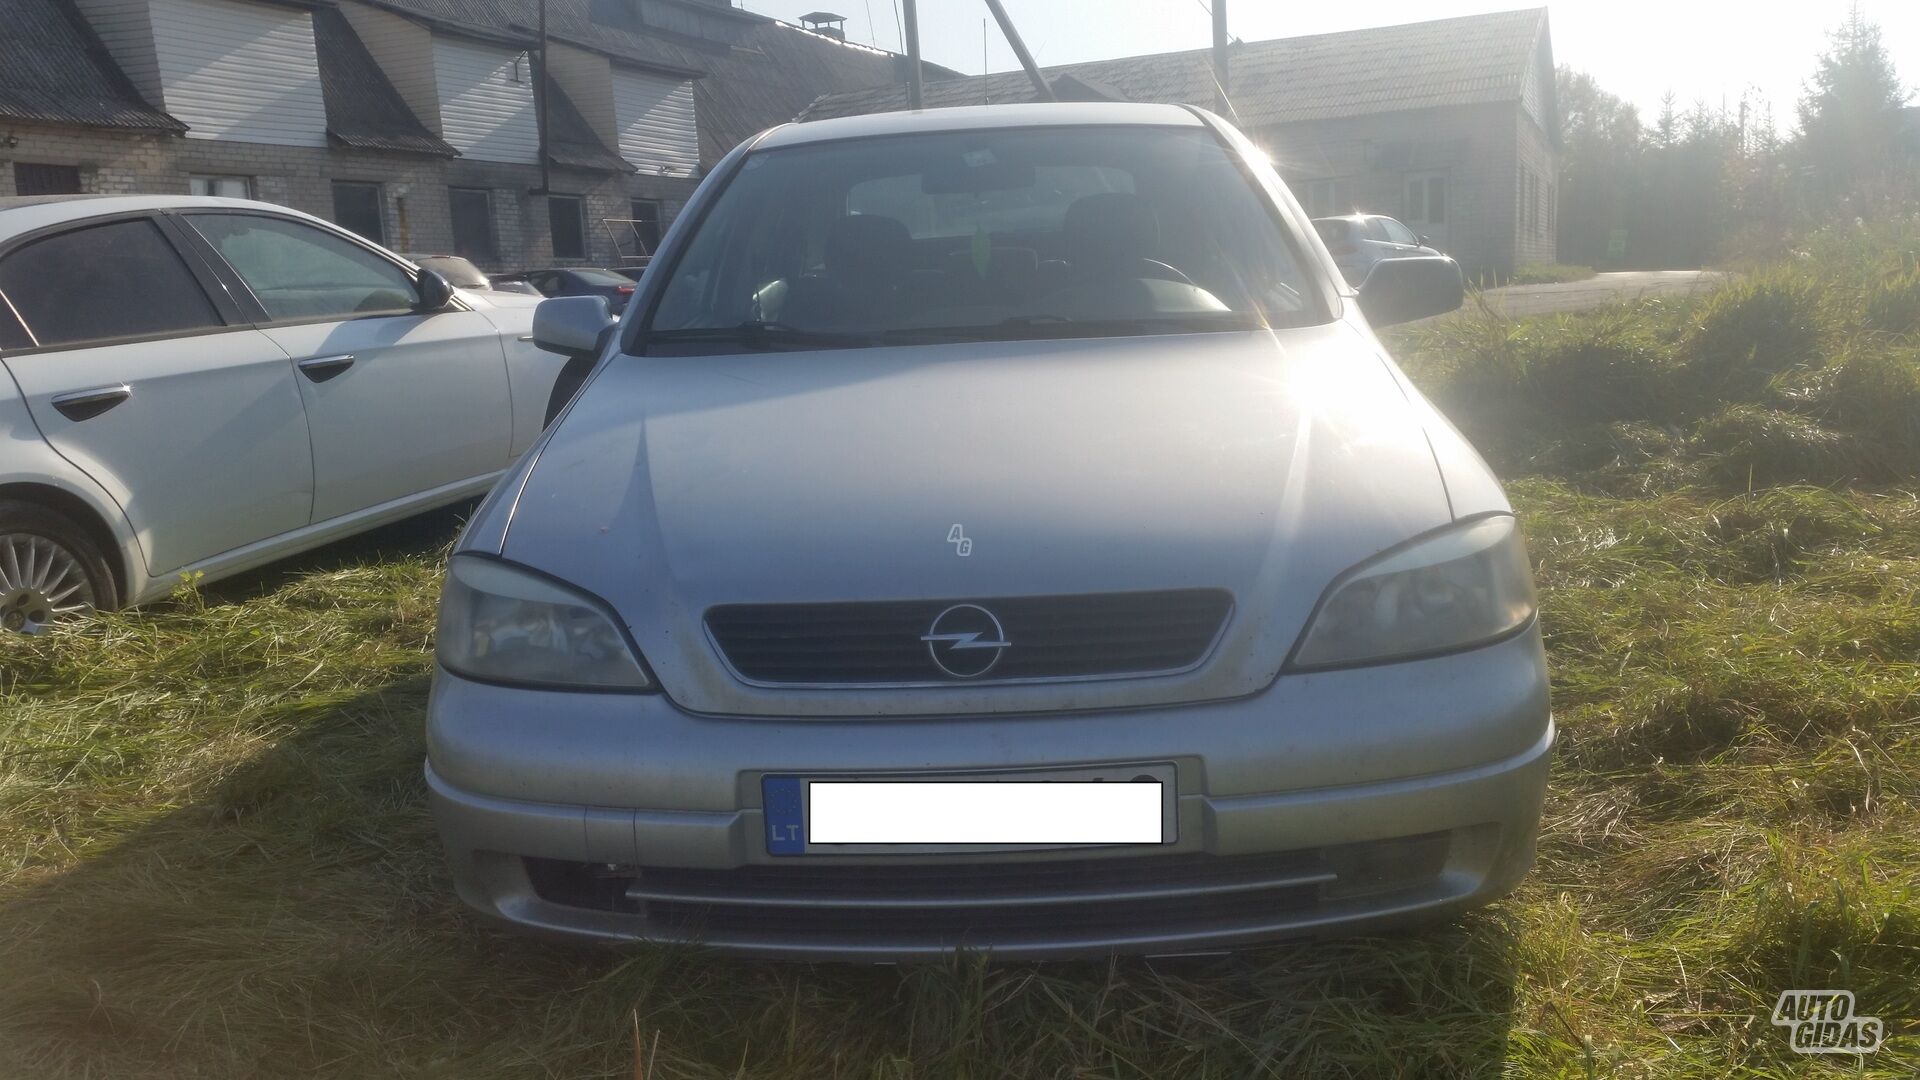 Opel Astra I 1999 г запчясти